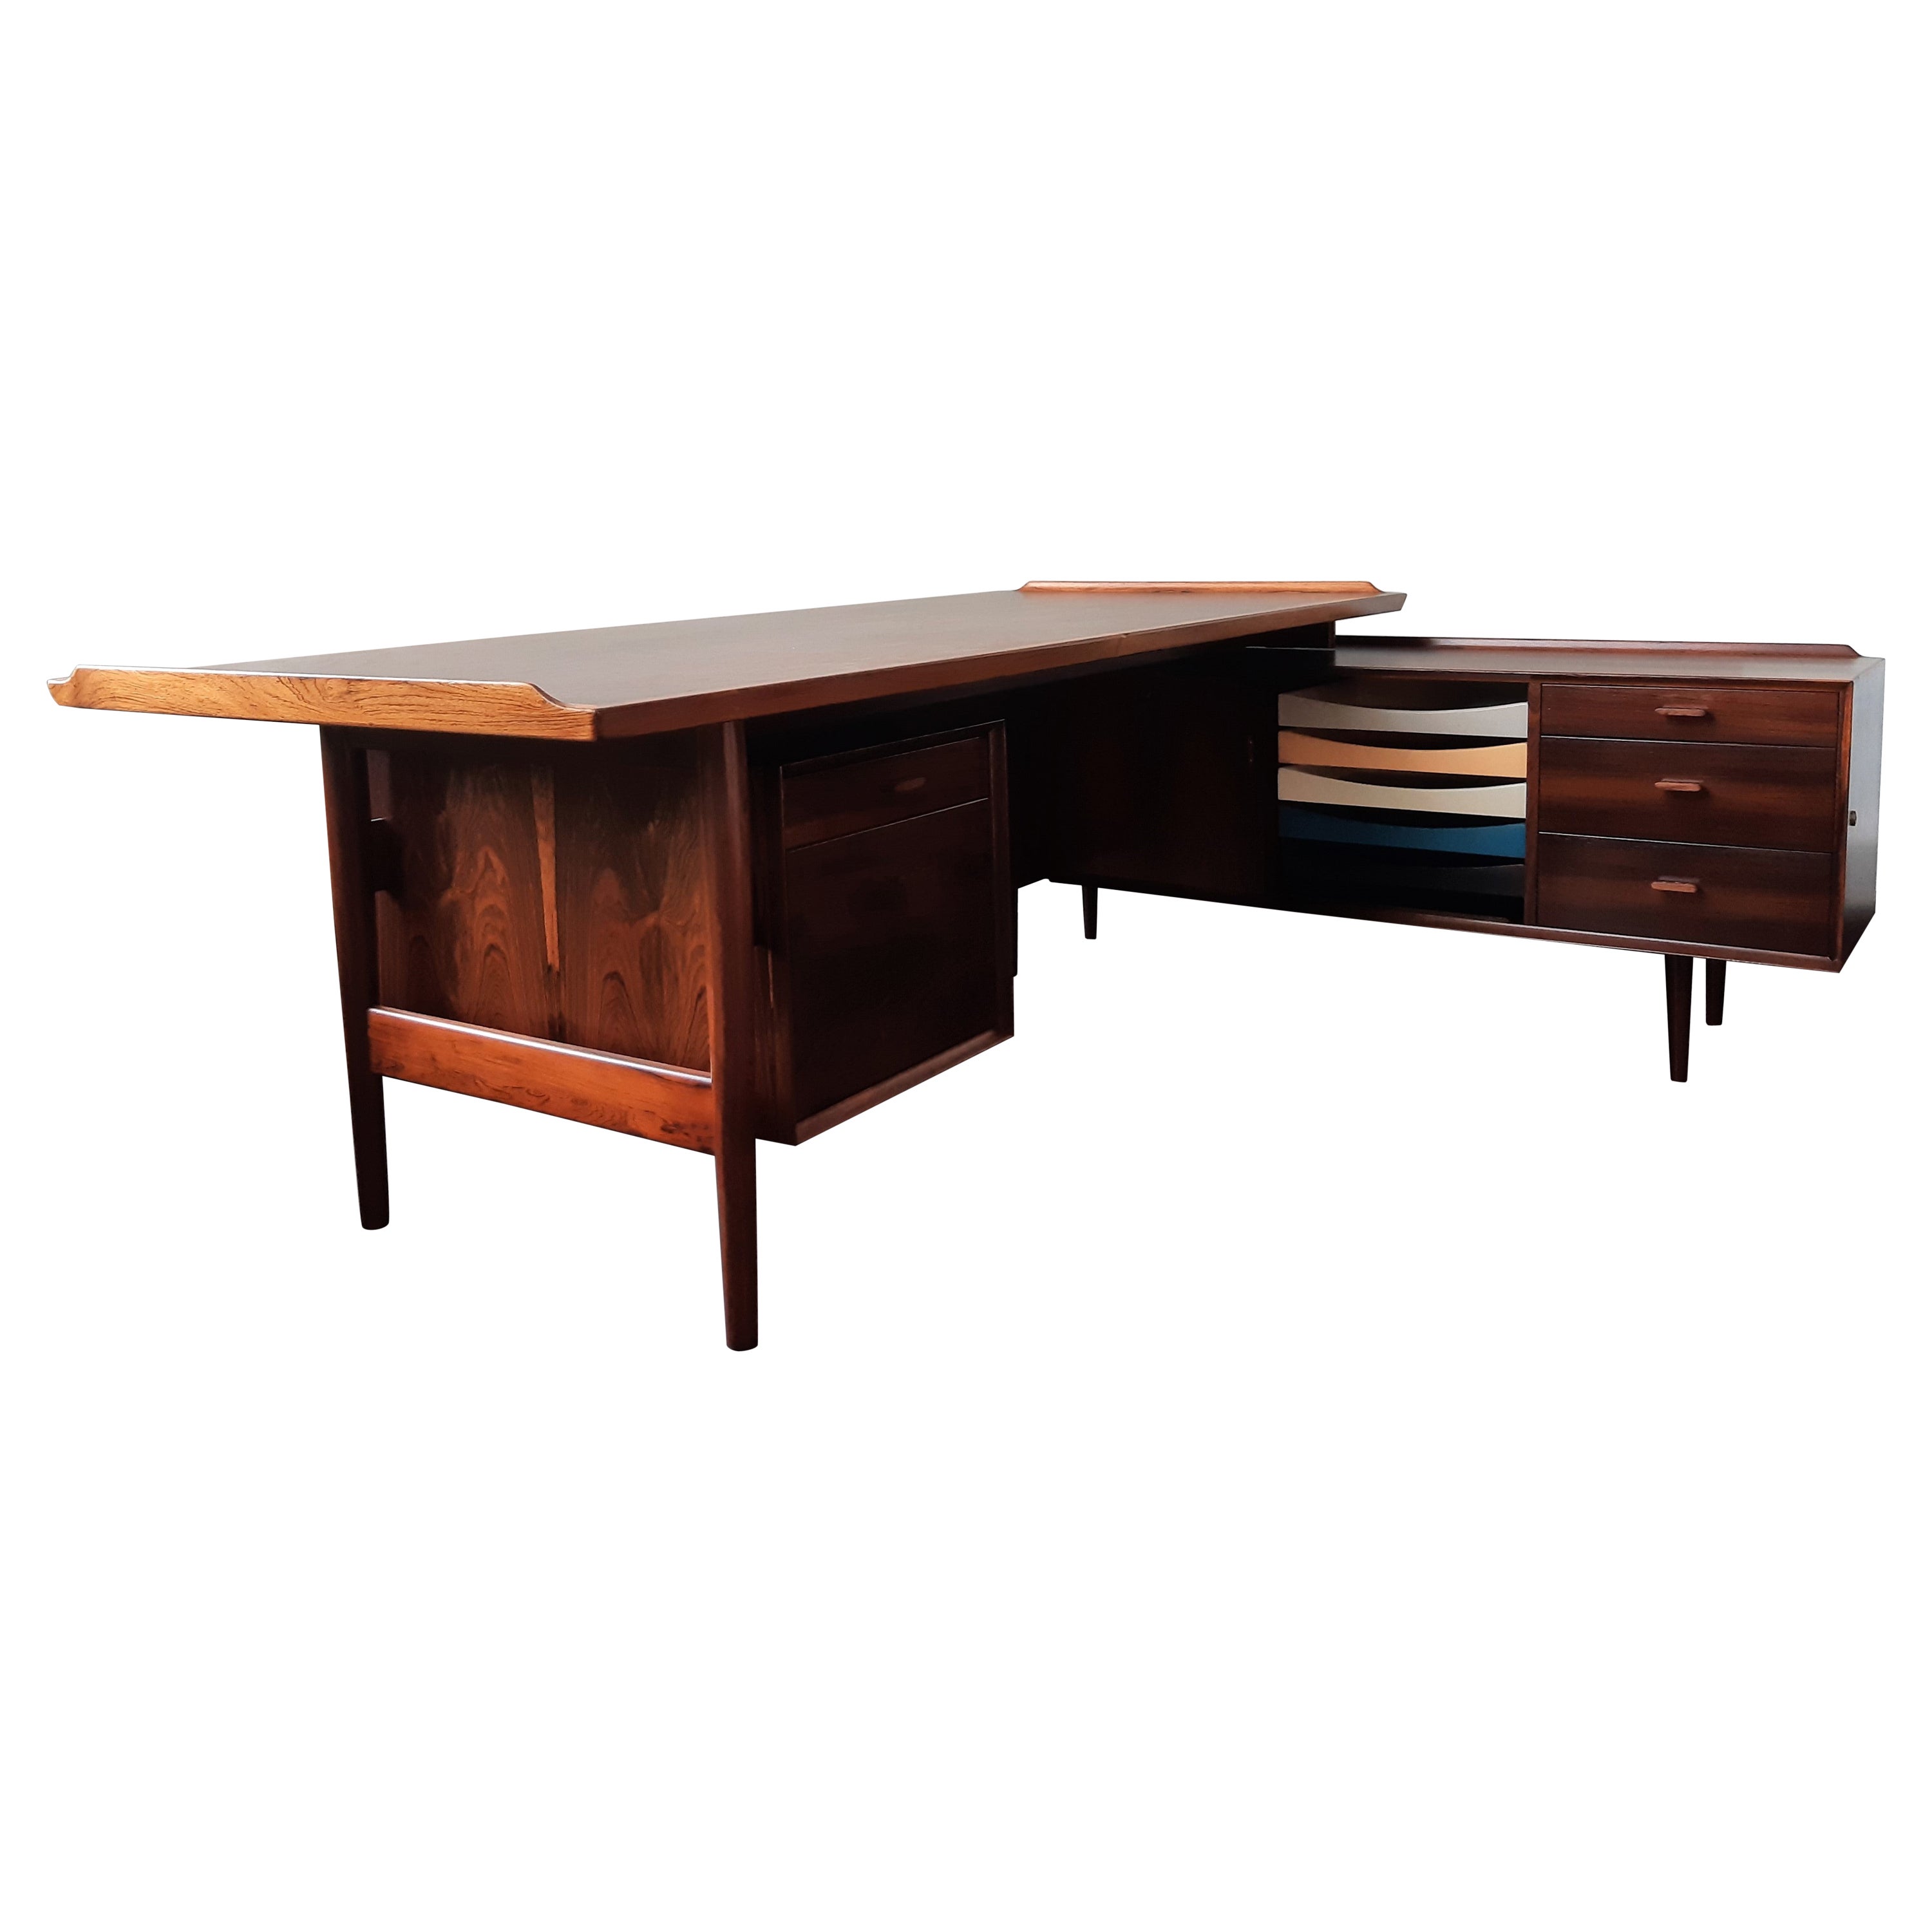 Executive Desk in Rosewood by Arne Vodder for Sibast Møbelfabrik, Denmark 1950's